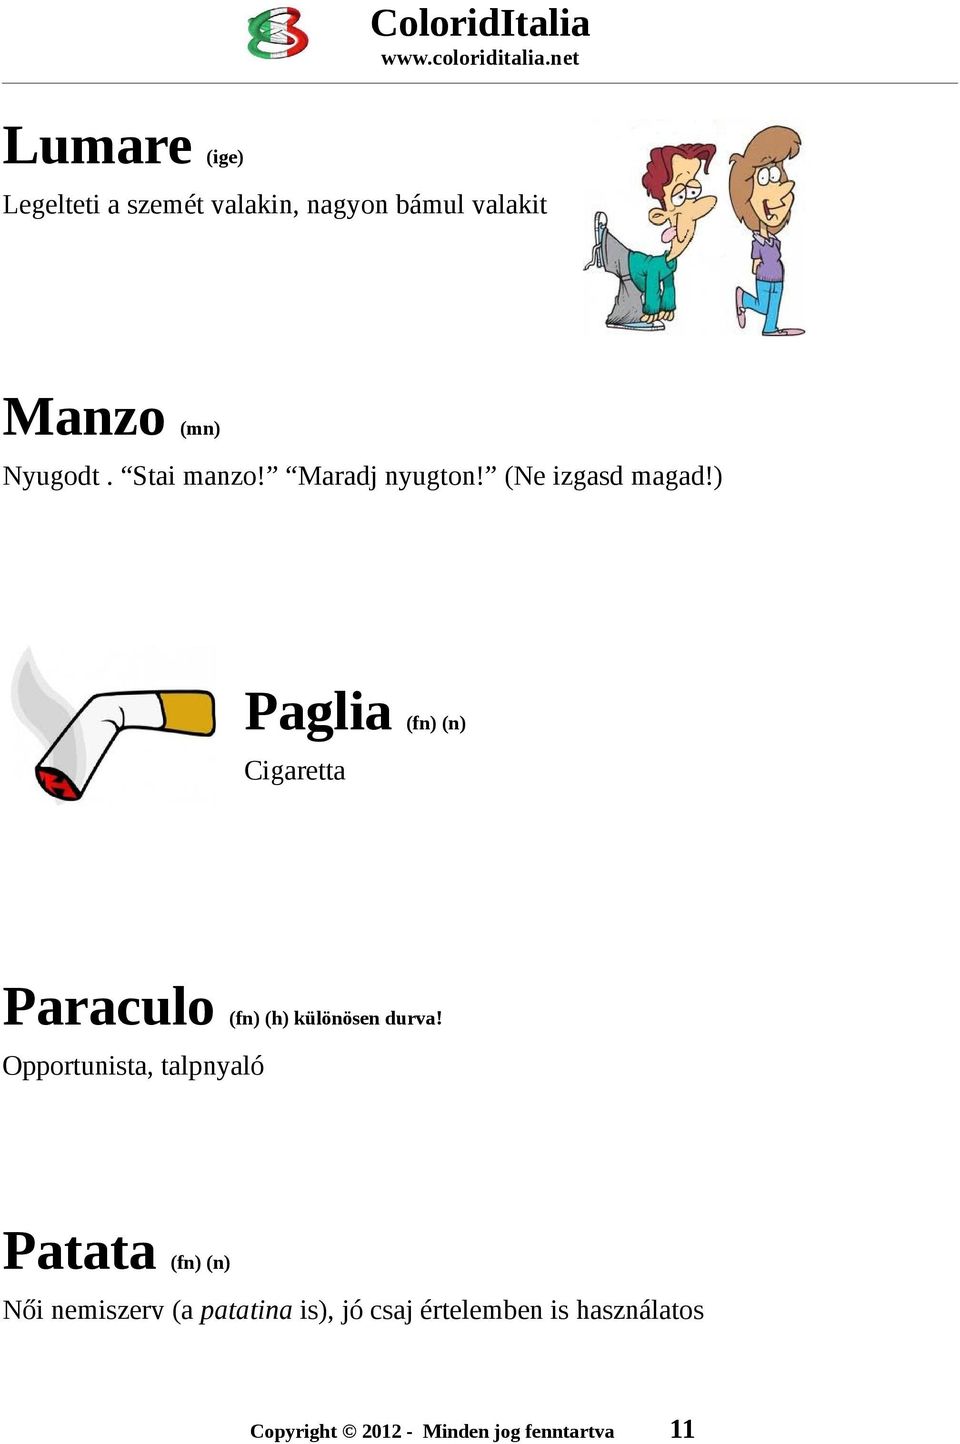 ) Paglia Cigaretta Paraculo (fn) (h) különösen durva!